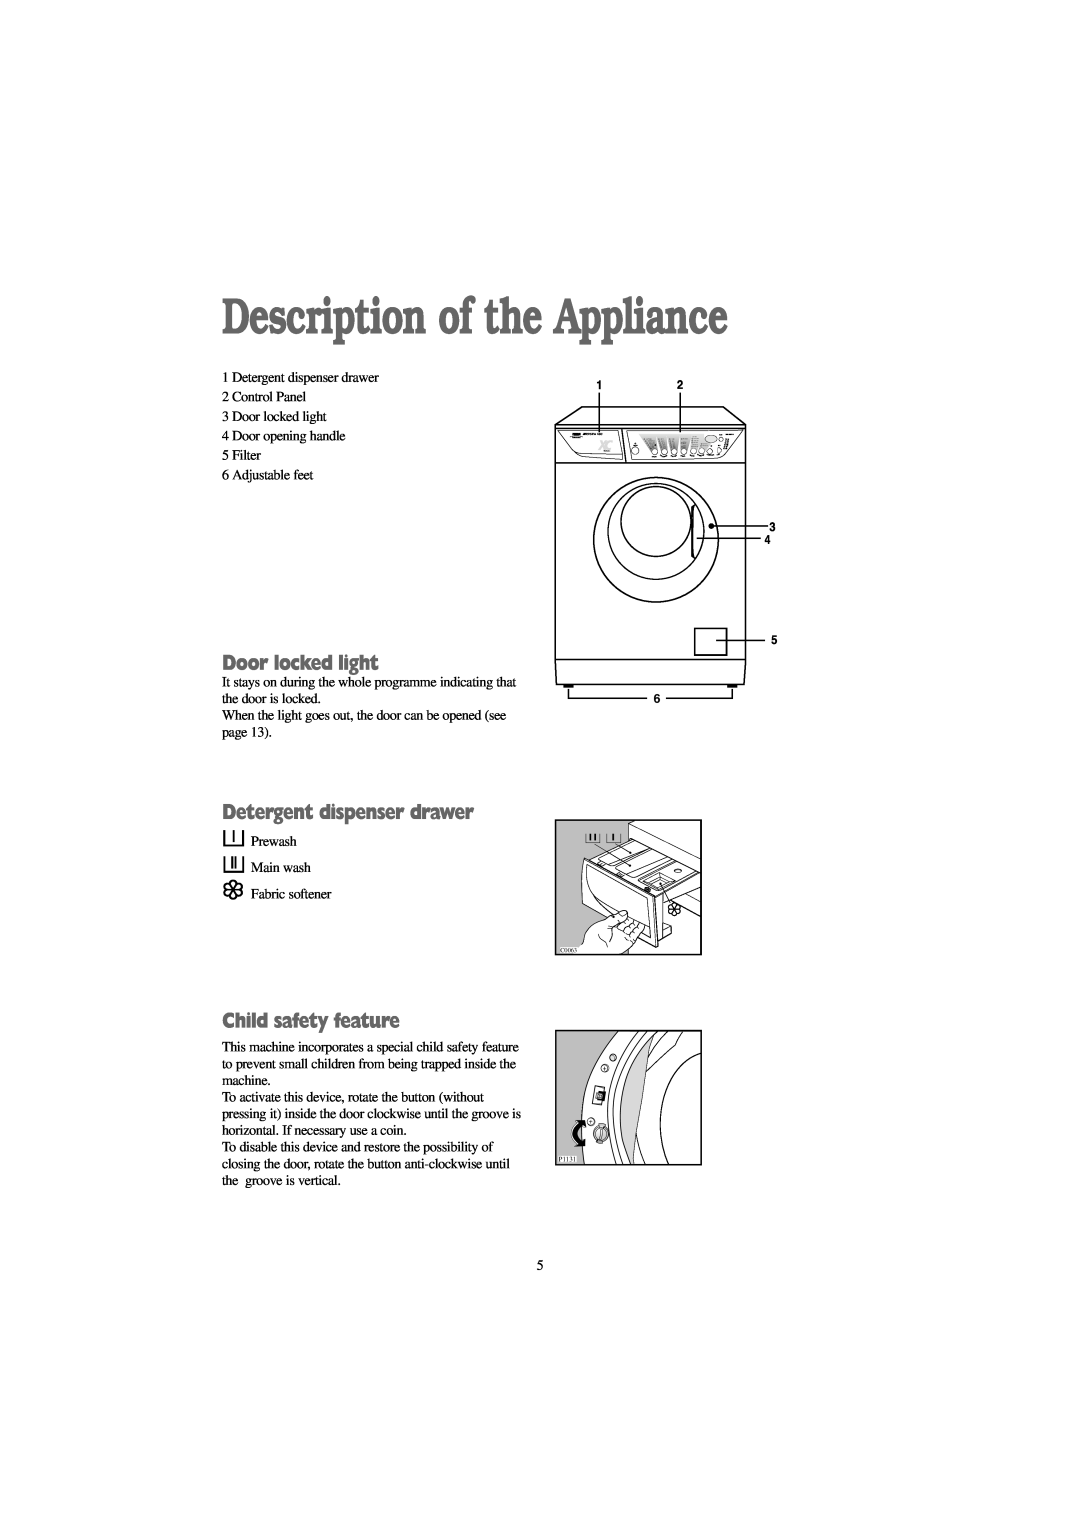 Zanussi WJD 1357 S manual Description of the Appliance, Door locked light, Detergent dispenser drawer, Child safety feature 